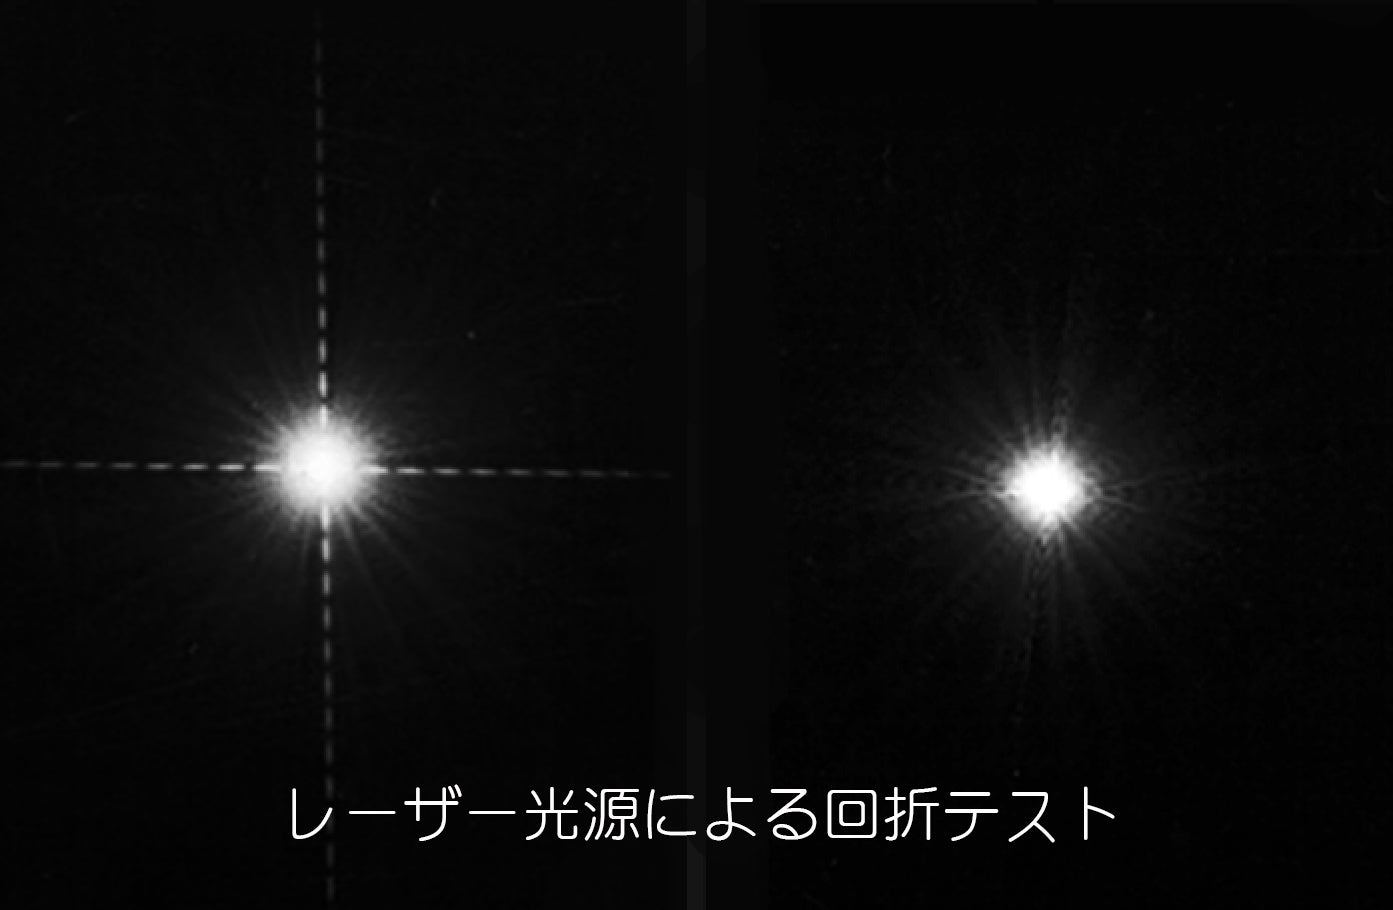 Takahashi ε160ED 구경 160mm 전용 바이너리 홀로그램 아포타이저 무료 배송